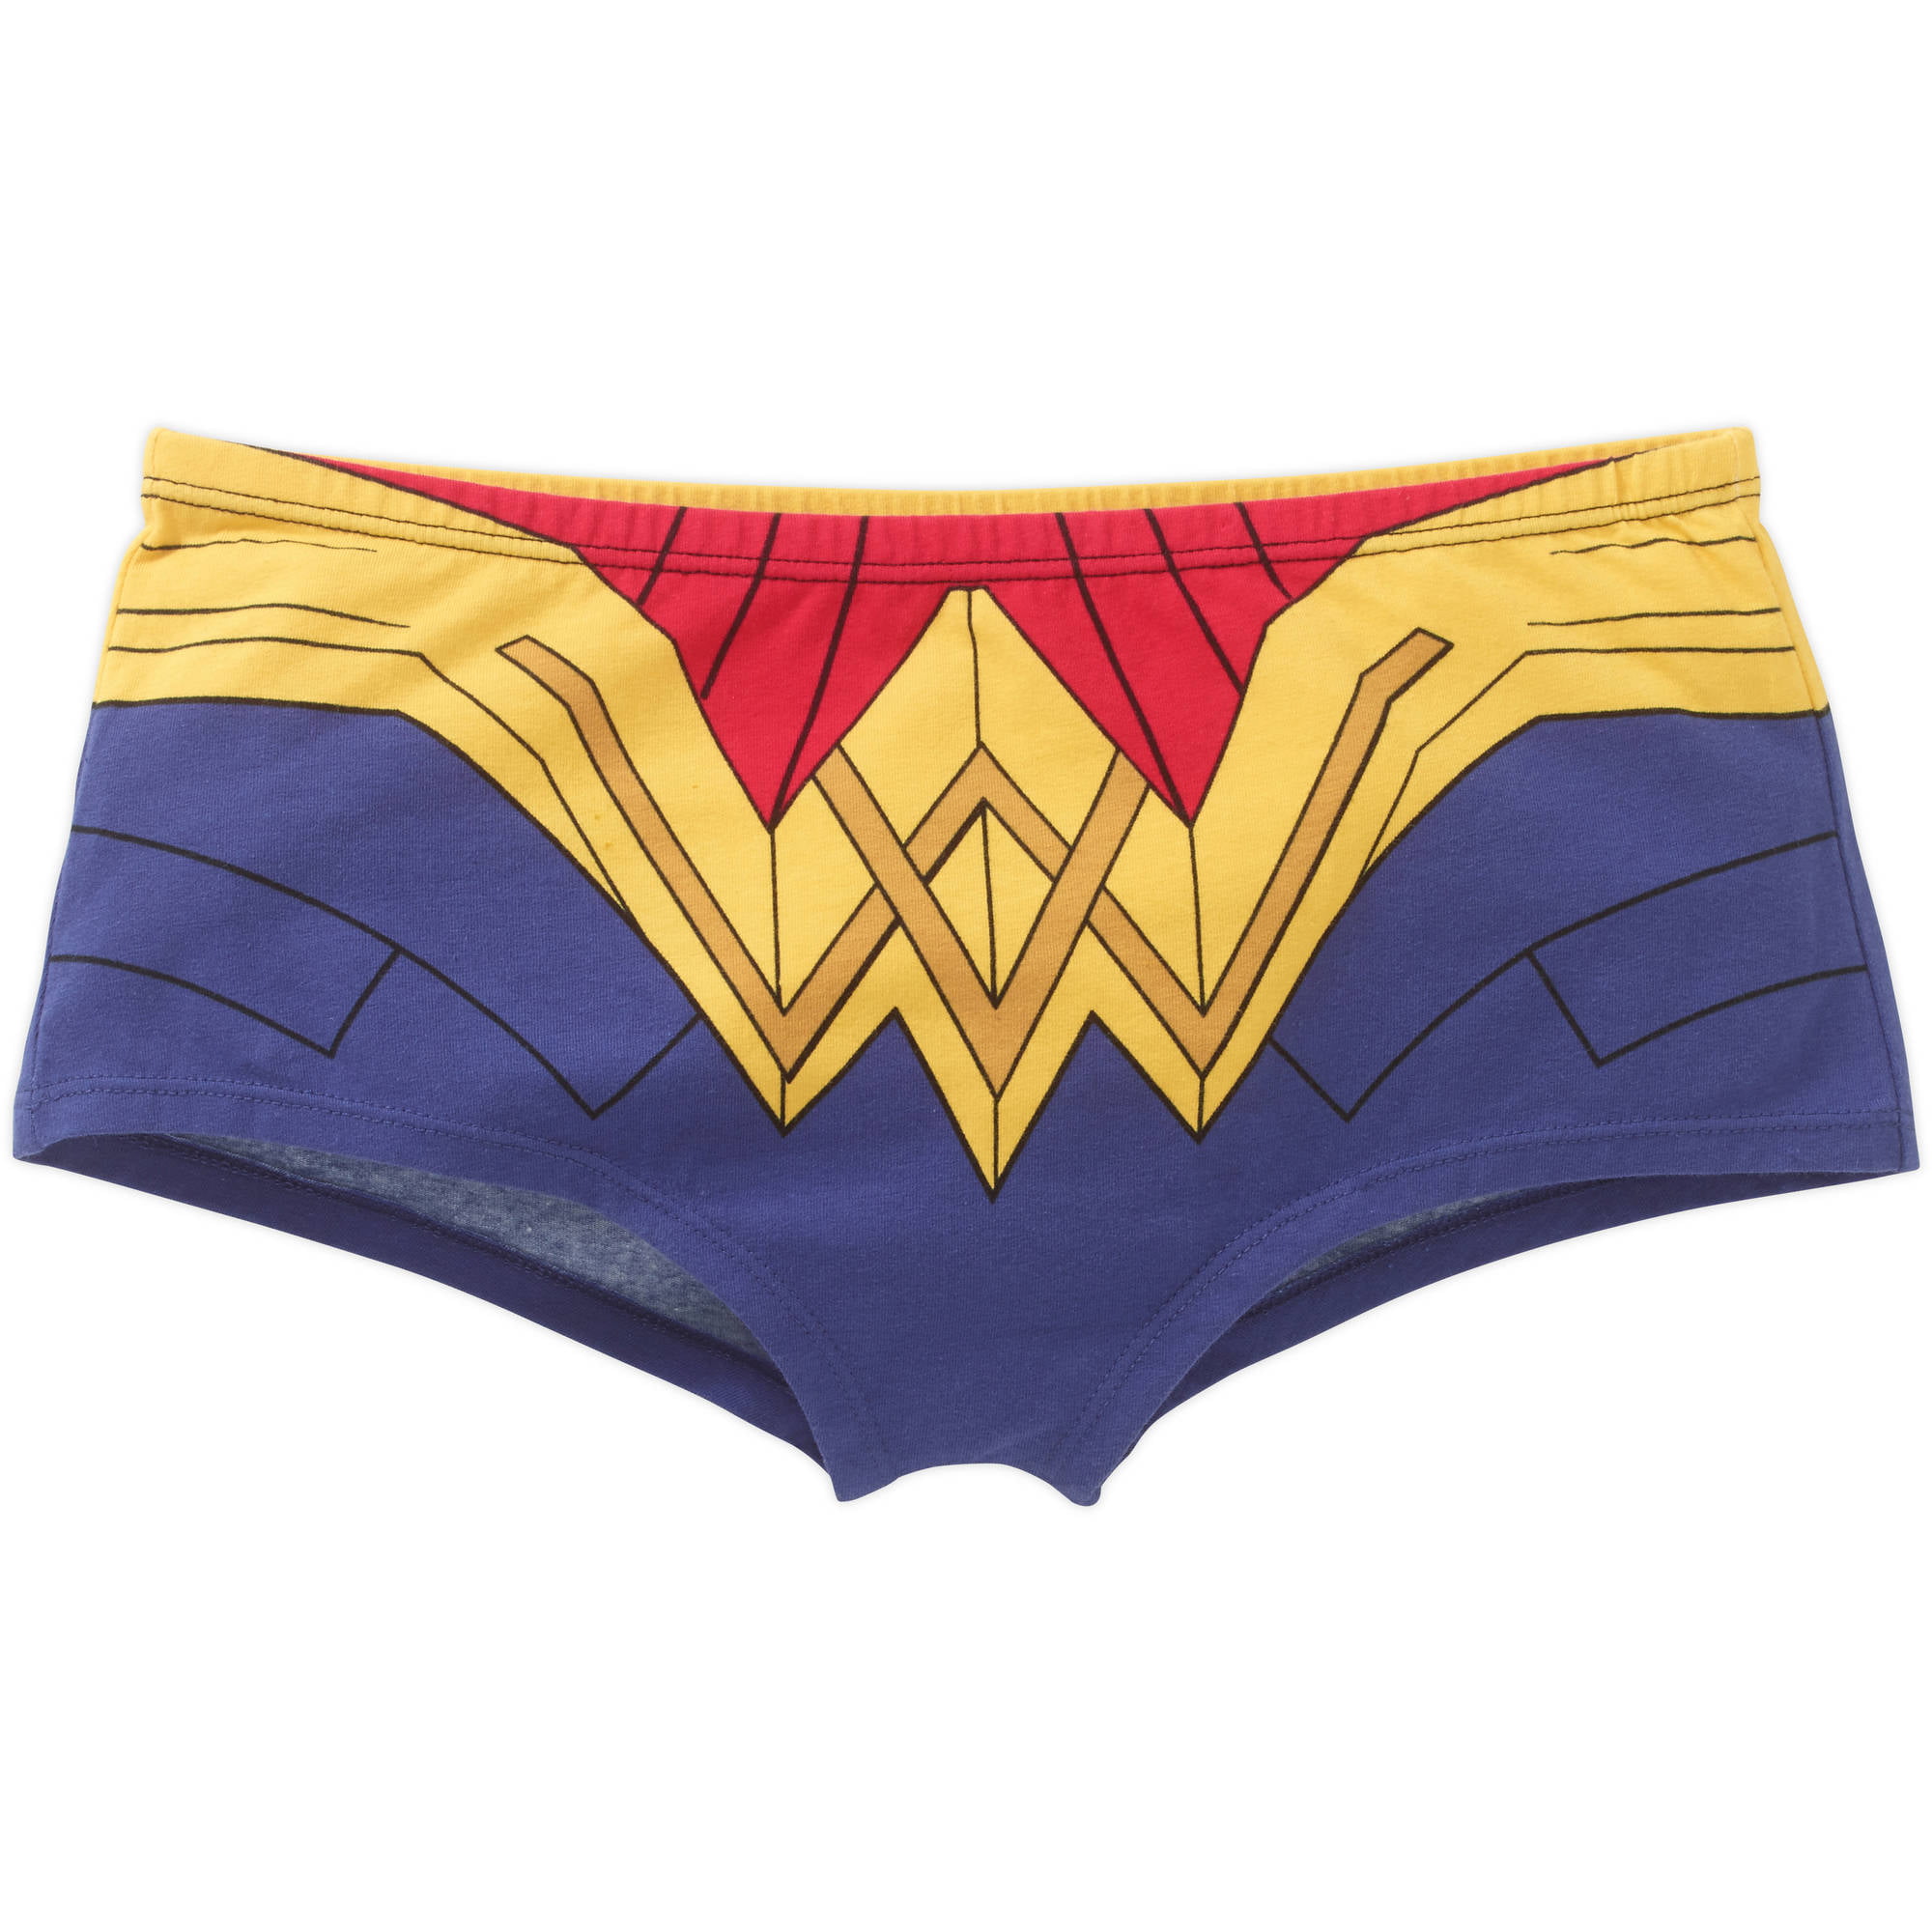 Superhero Licensed Goods Wonder Woman Boyshort with Foil Logo